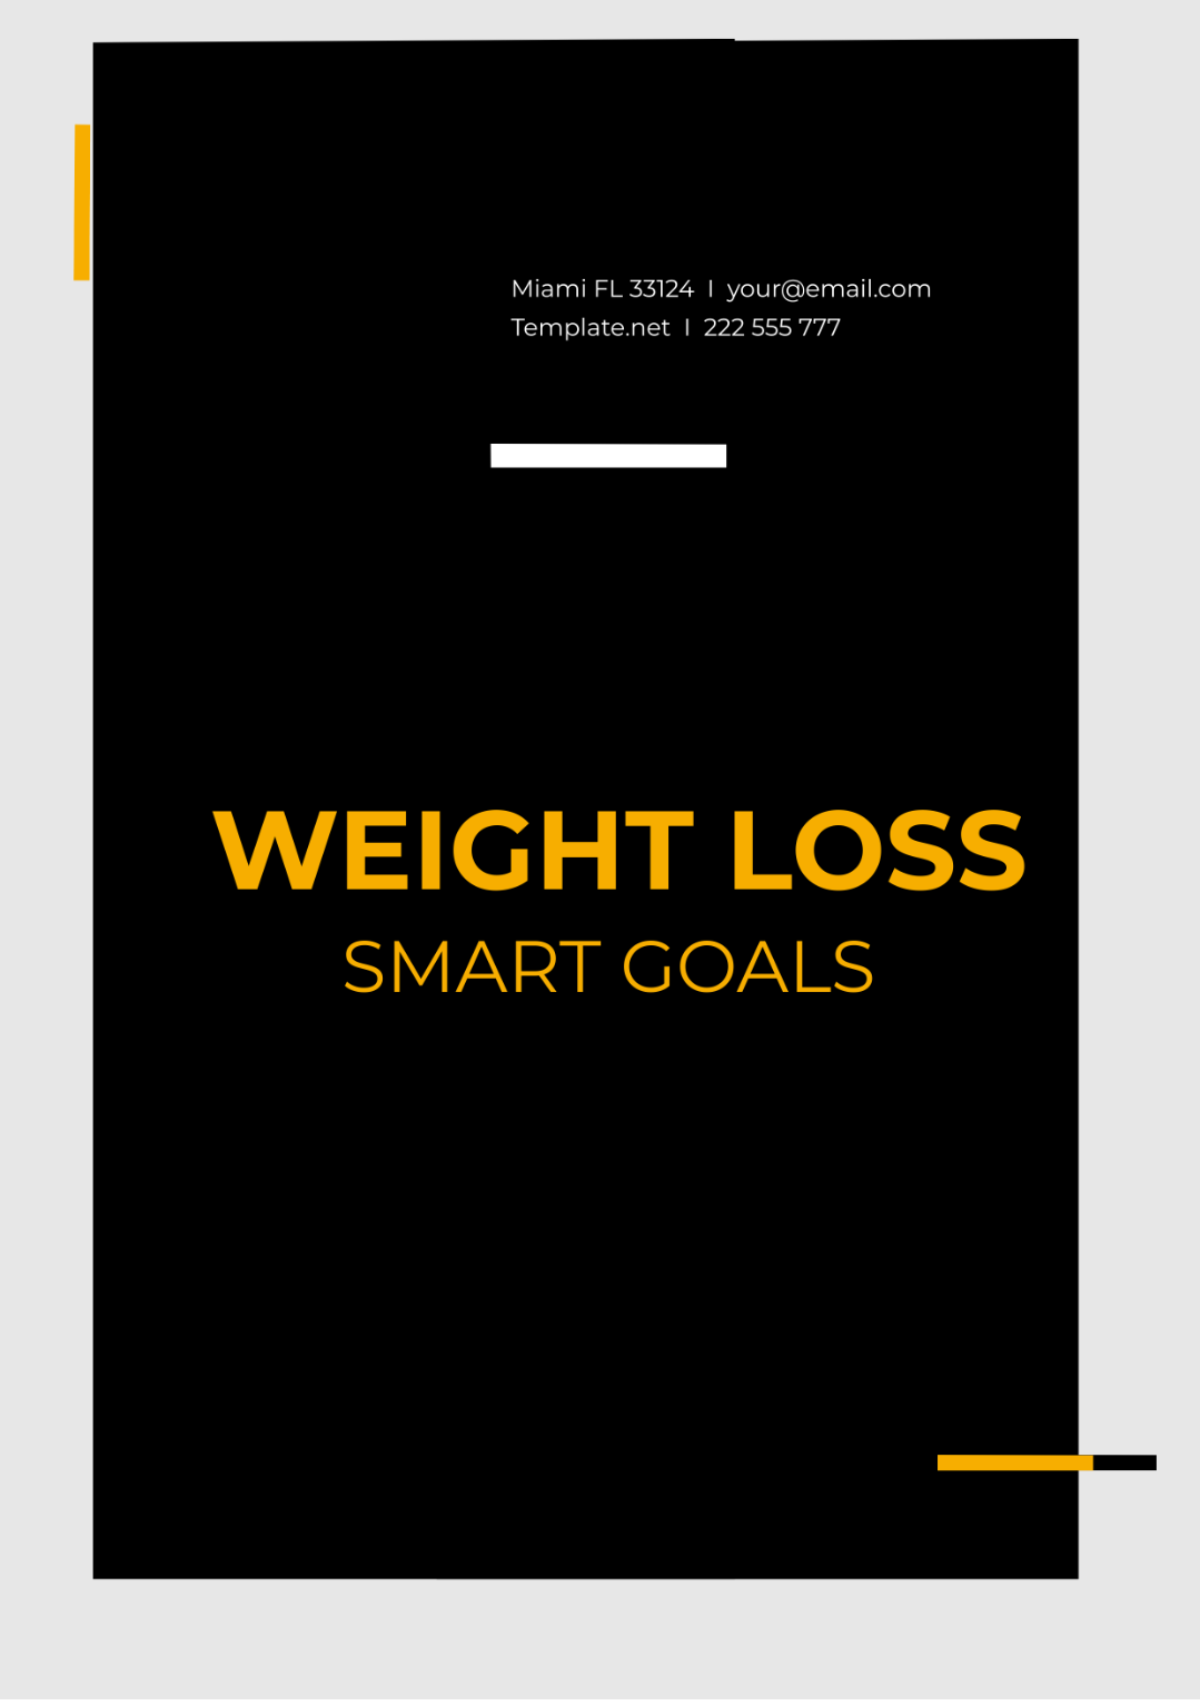 SMART Goals for Weight Loss Template